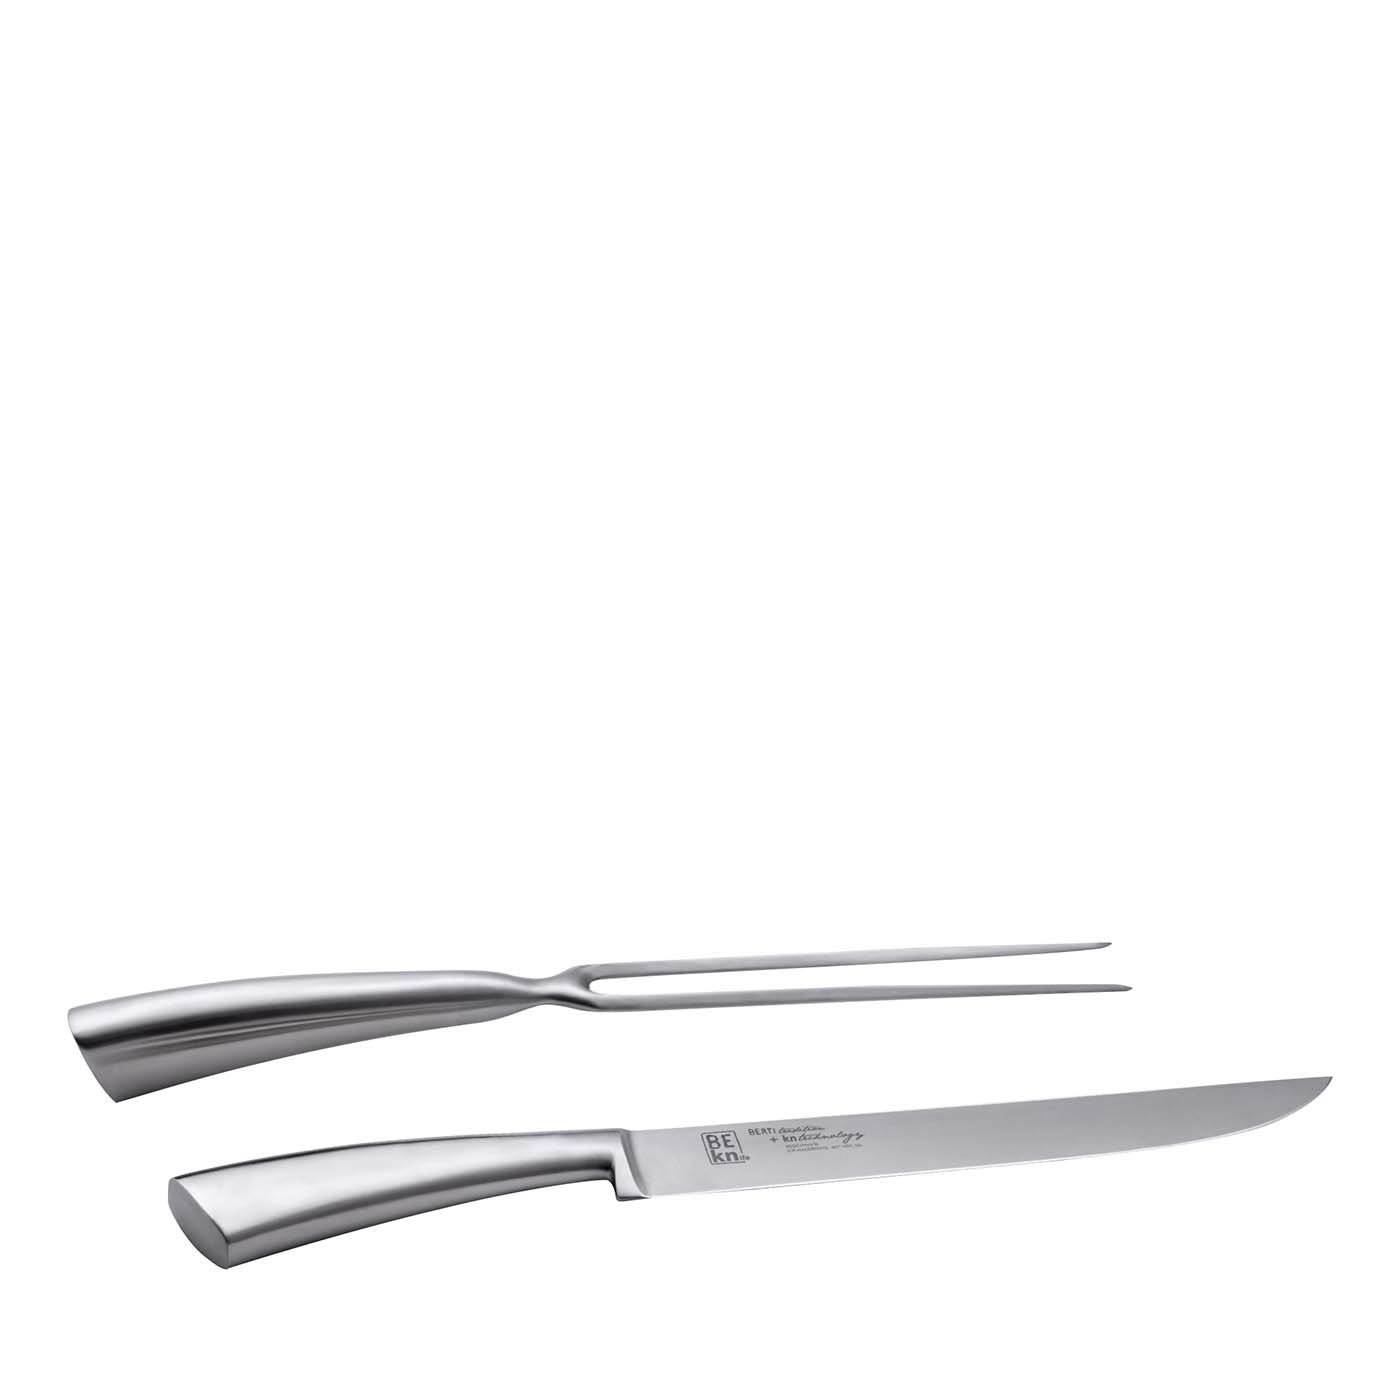 Set of Roasting Knife and Carving Fork - KnIndustrie